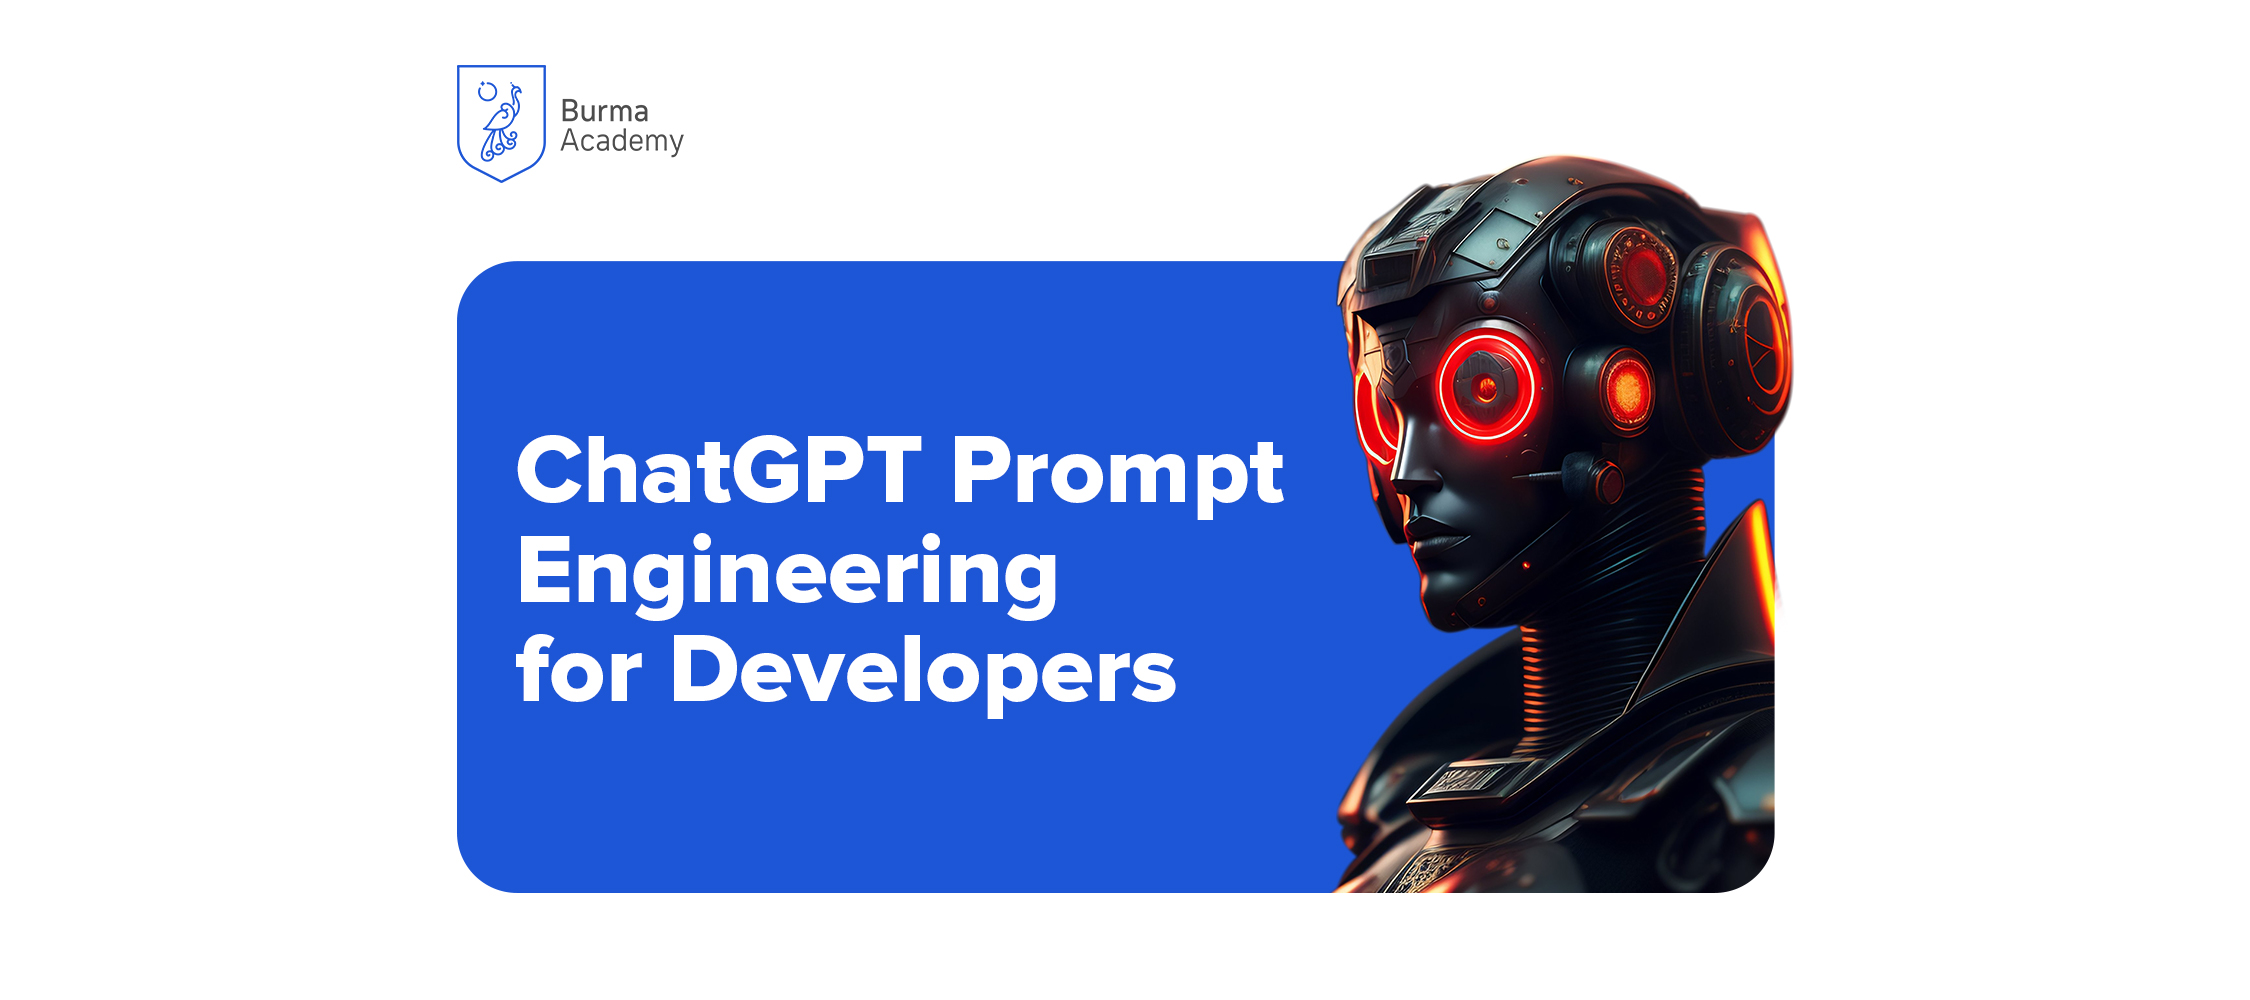 ChatGPT Prompt Engineering for Developers DL001